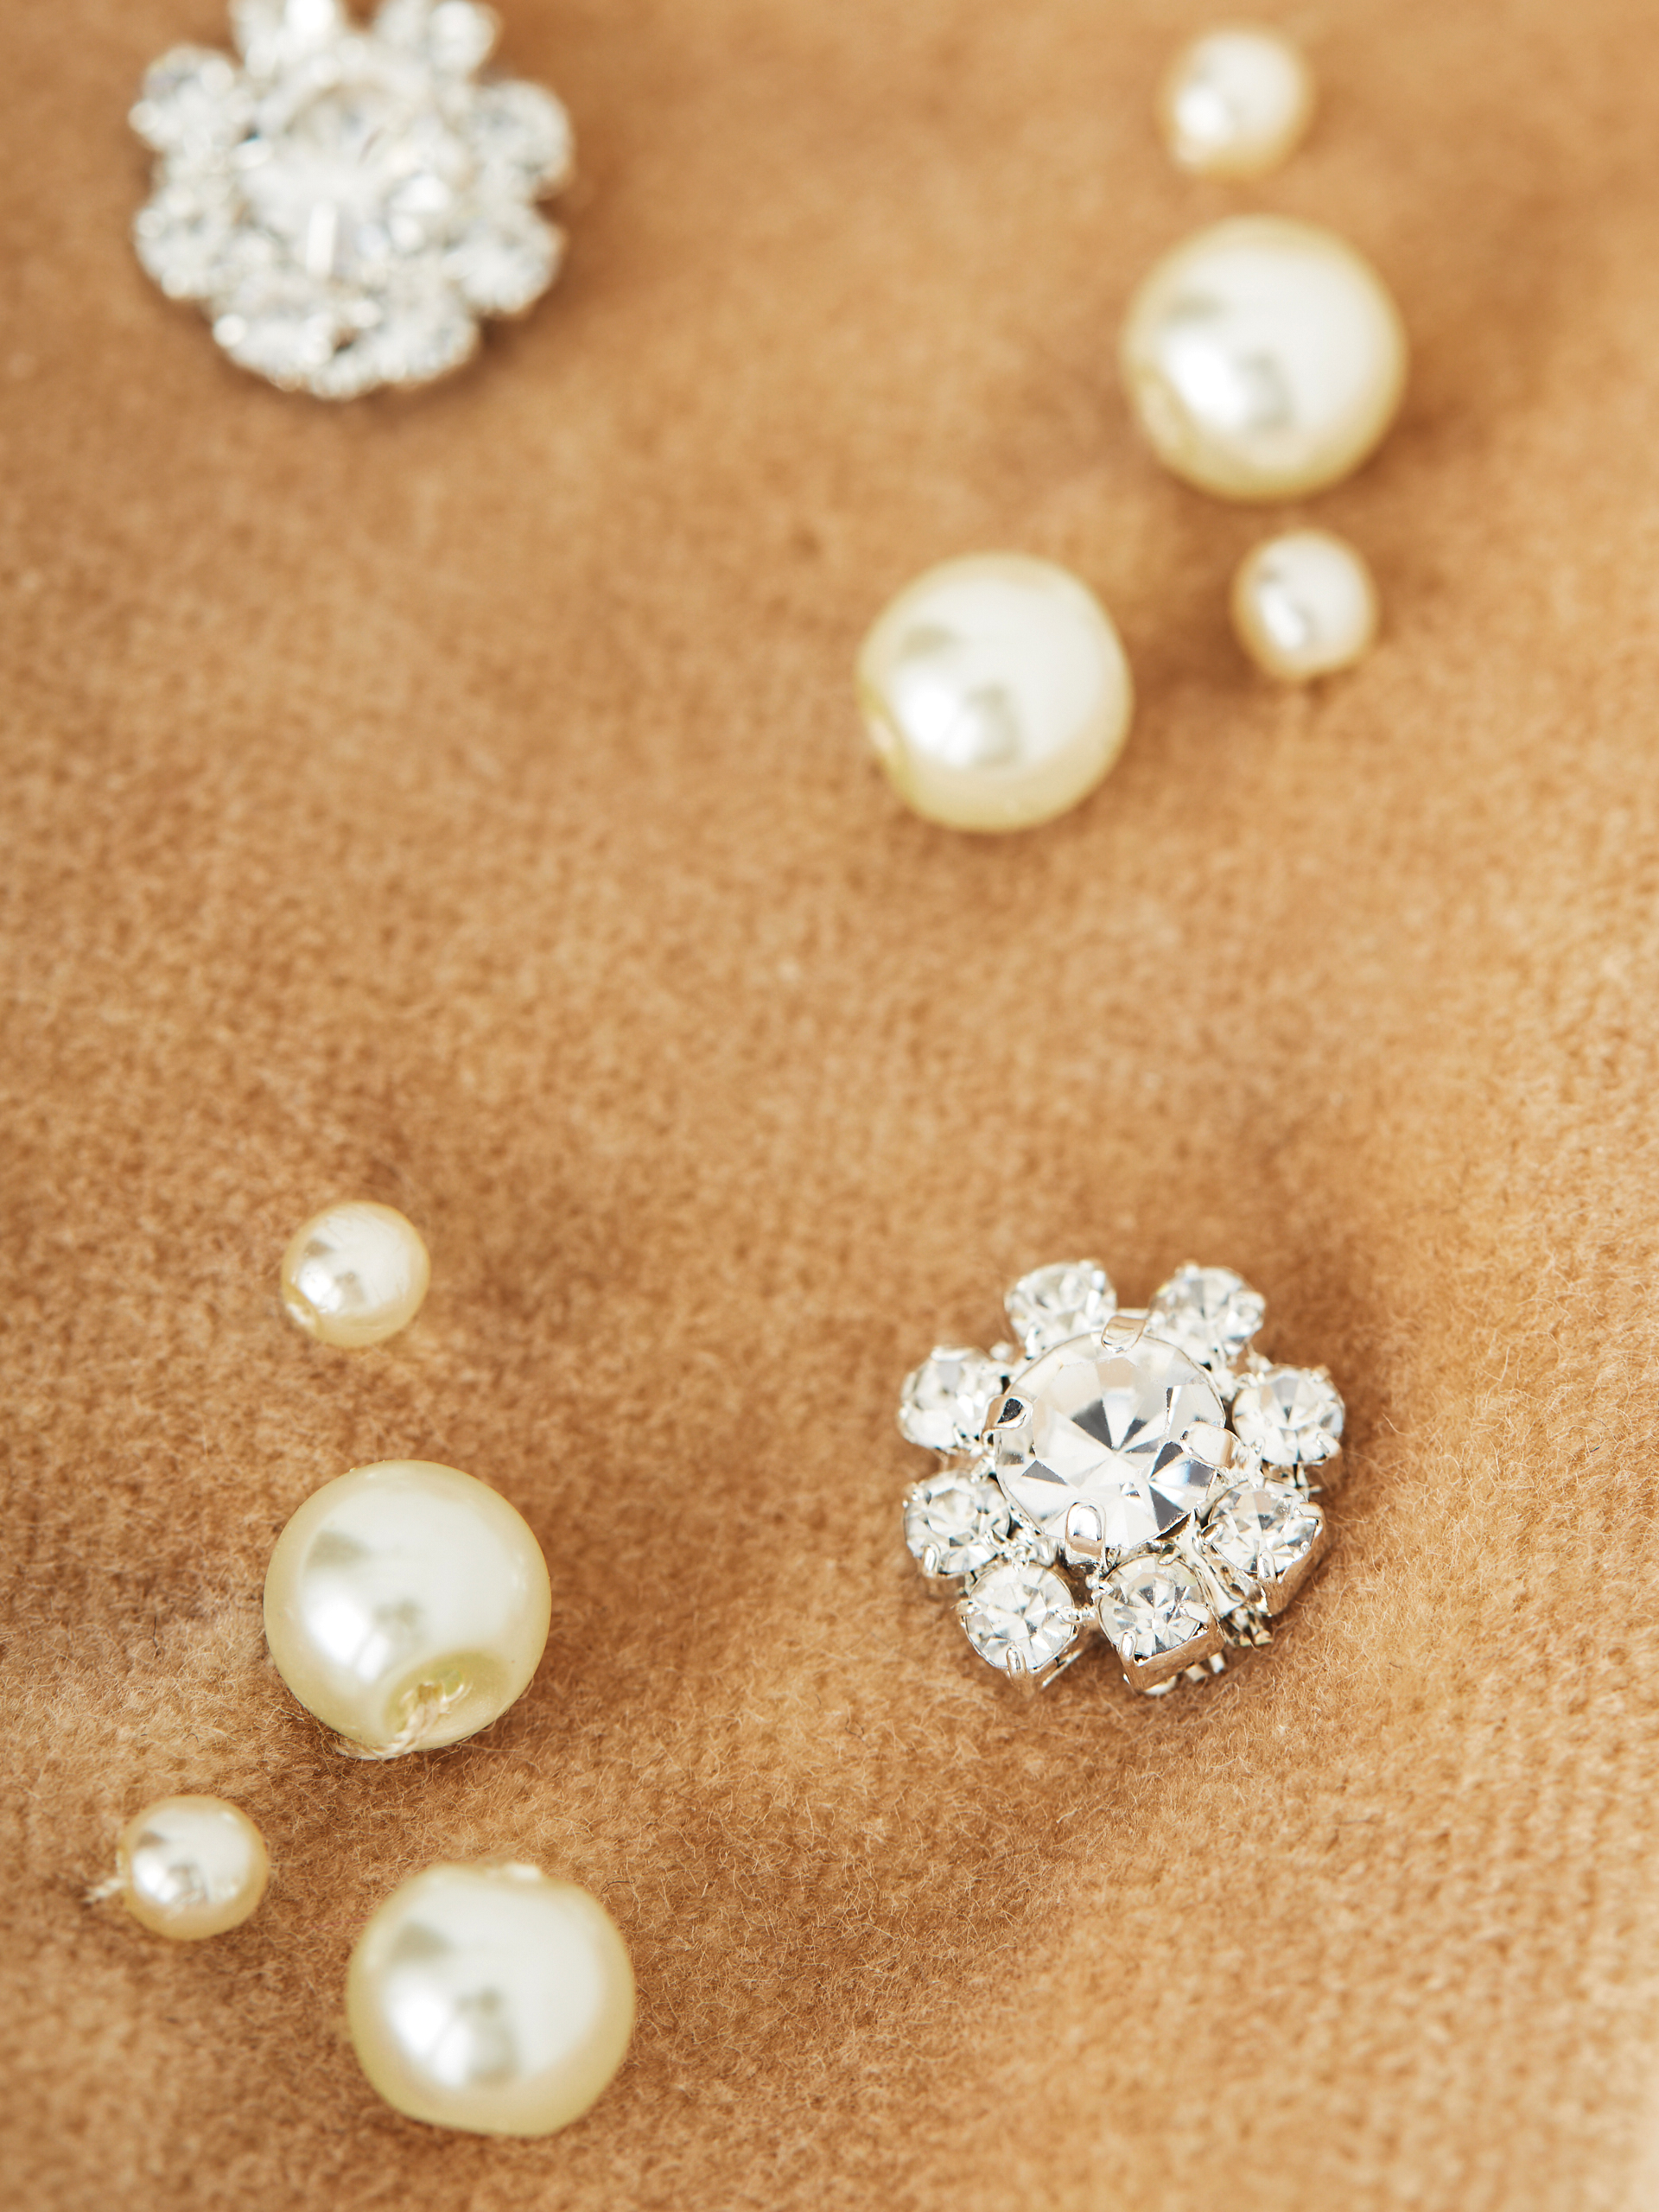 Beige scrunchie with jewelery elements